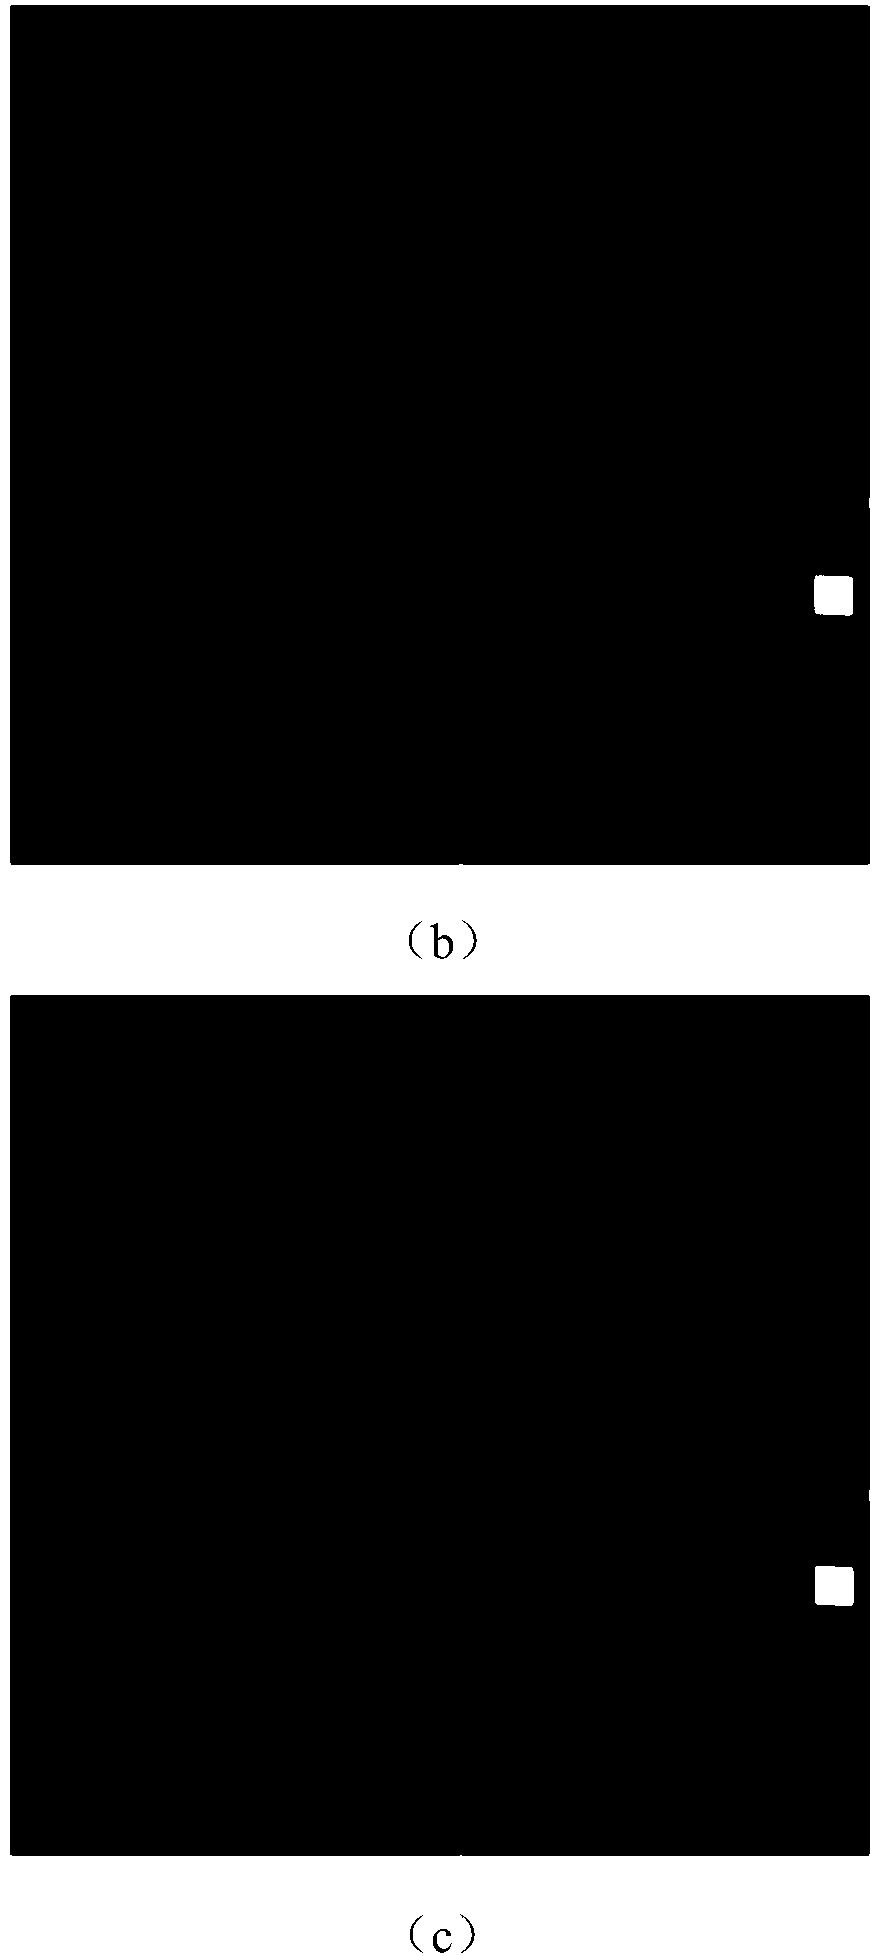 High spectral image super-resolution method based on probability generation model